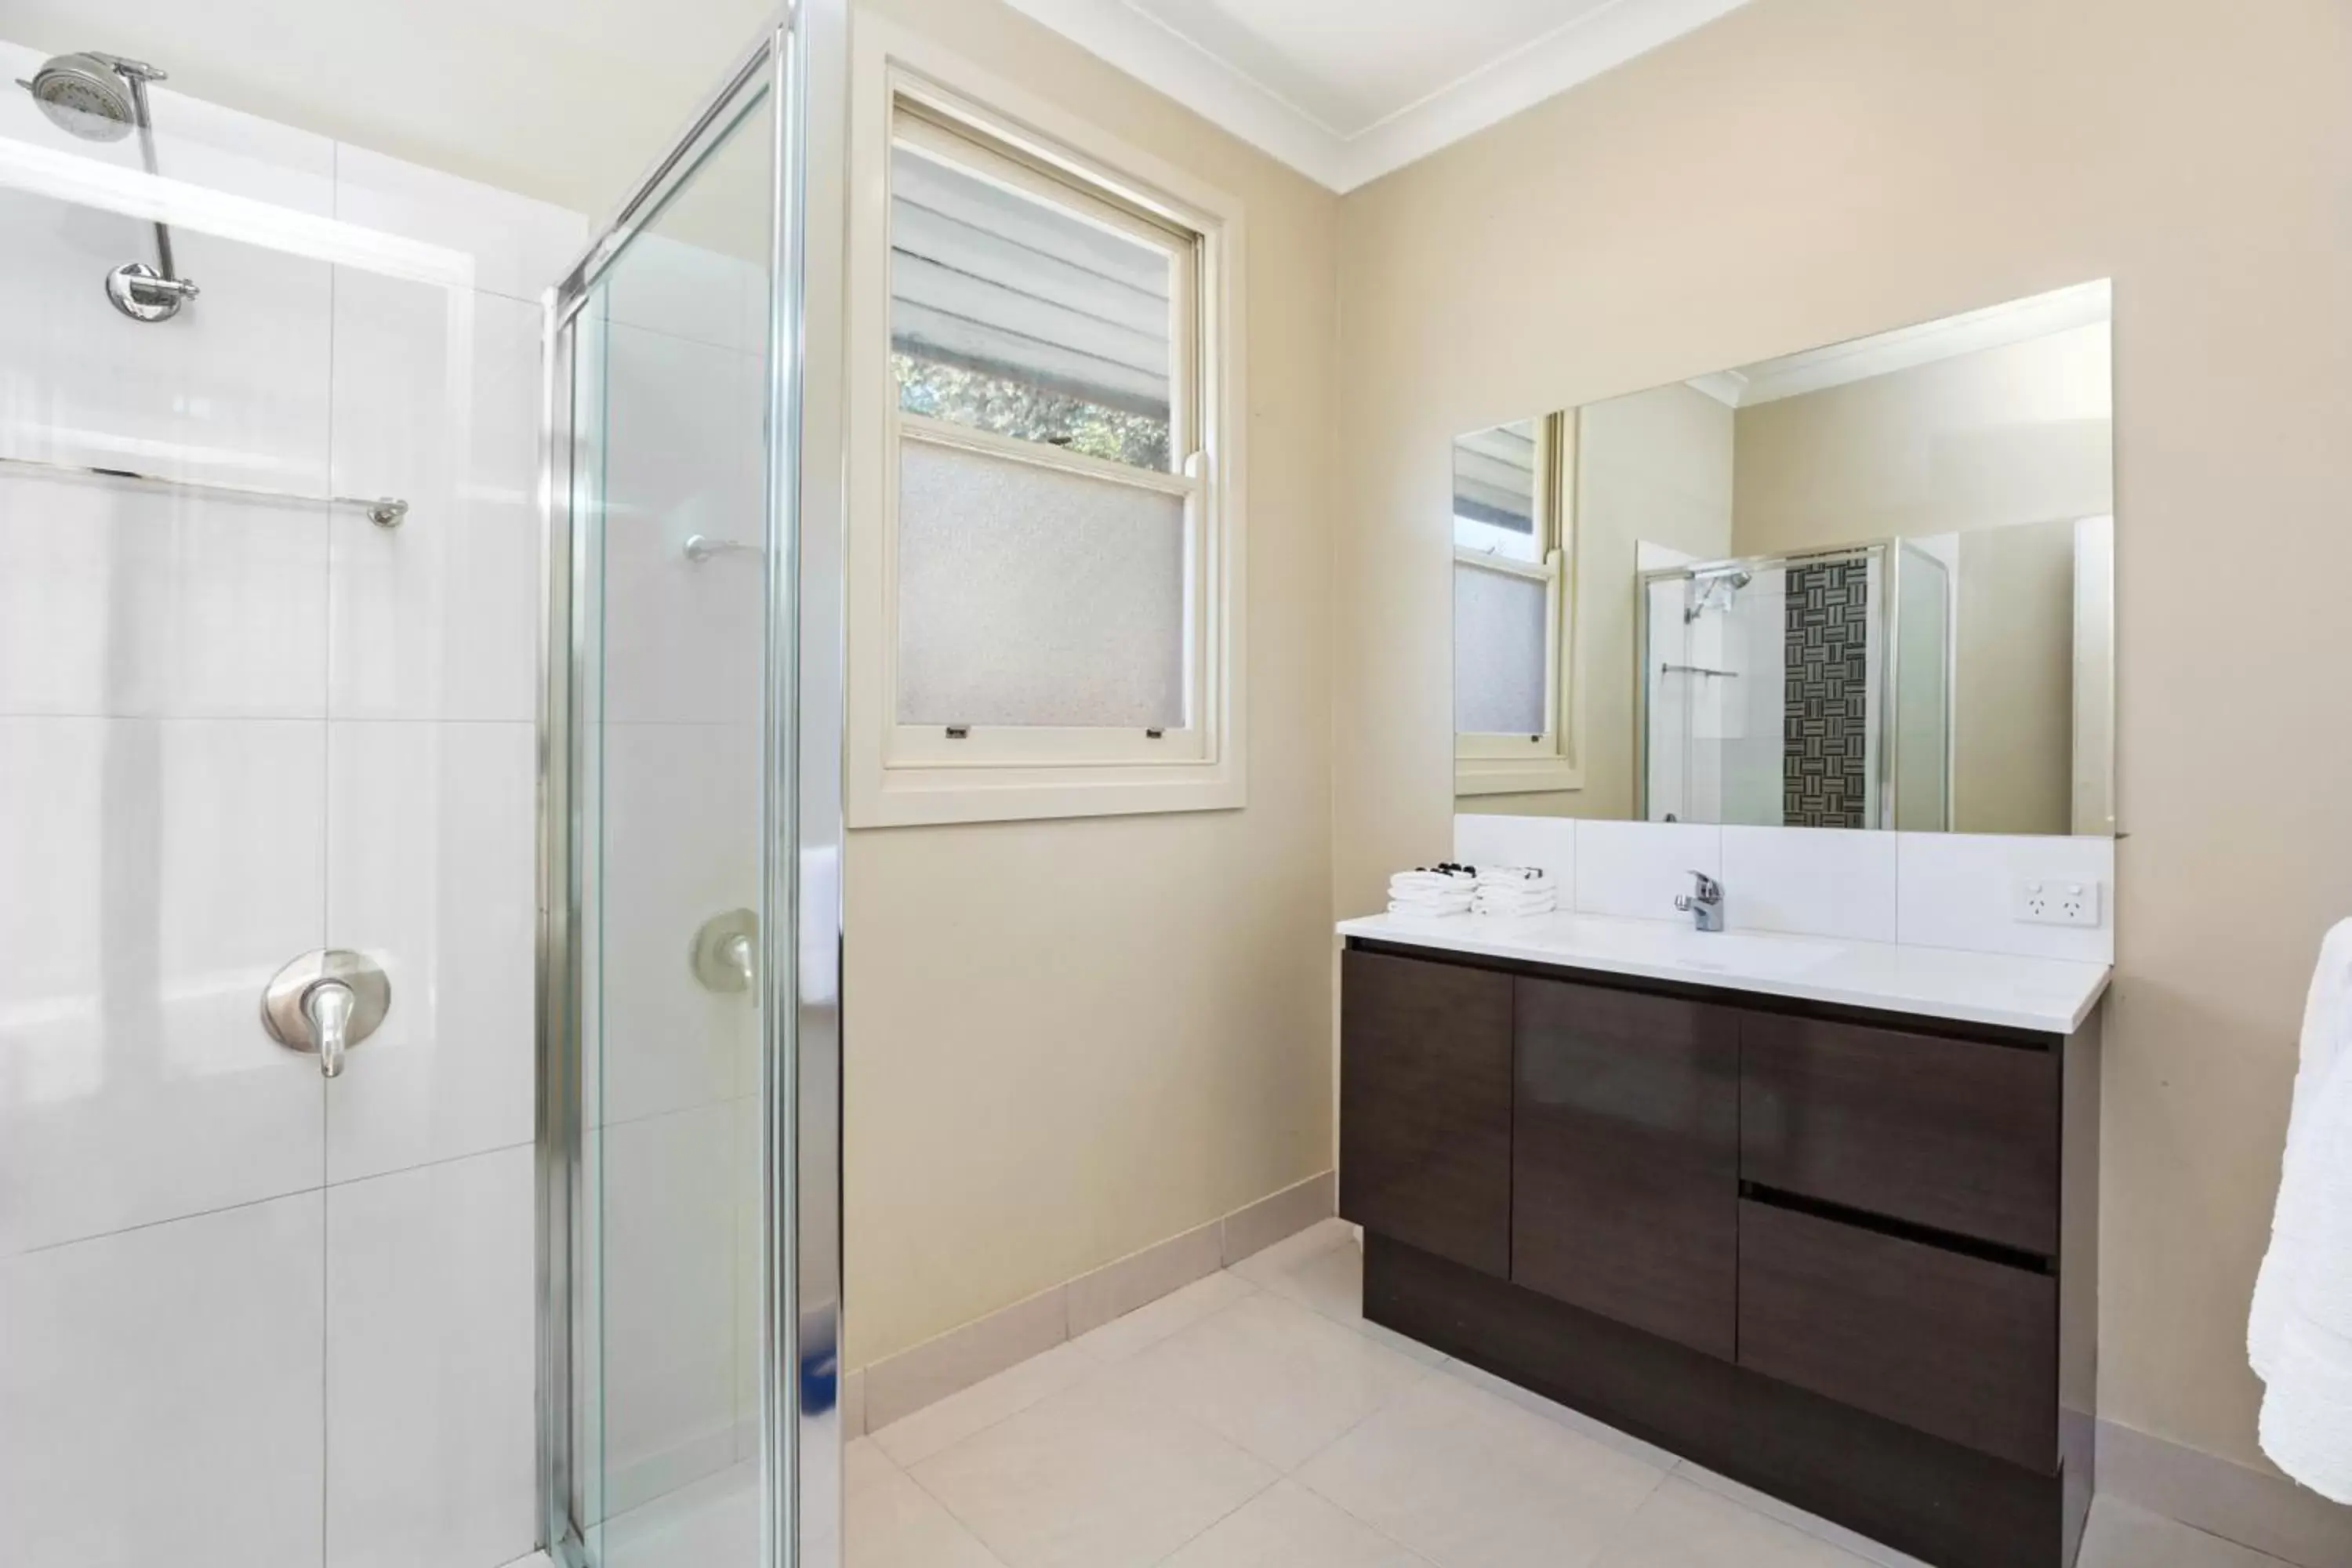 Bathroom in National Hotel Complex Bendigo